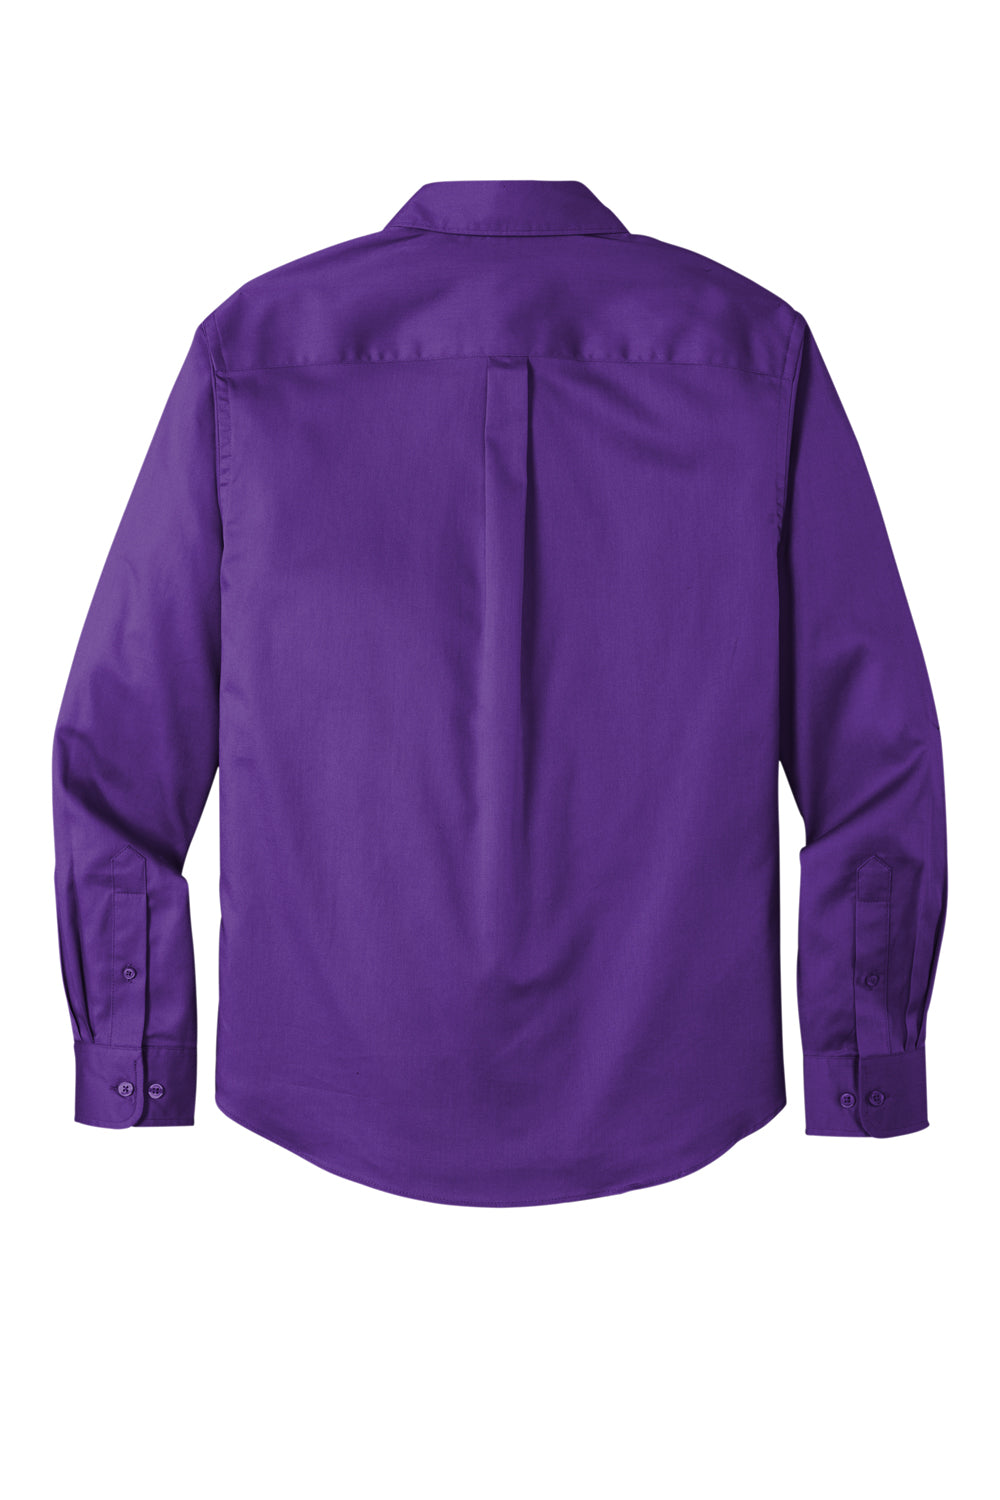 Port Authority W808 SuperPro Wrinkle Resistant React Long Sleeve Button Down Shirt w/ Pocket Purple Flat Back